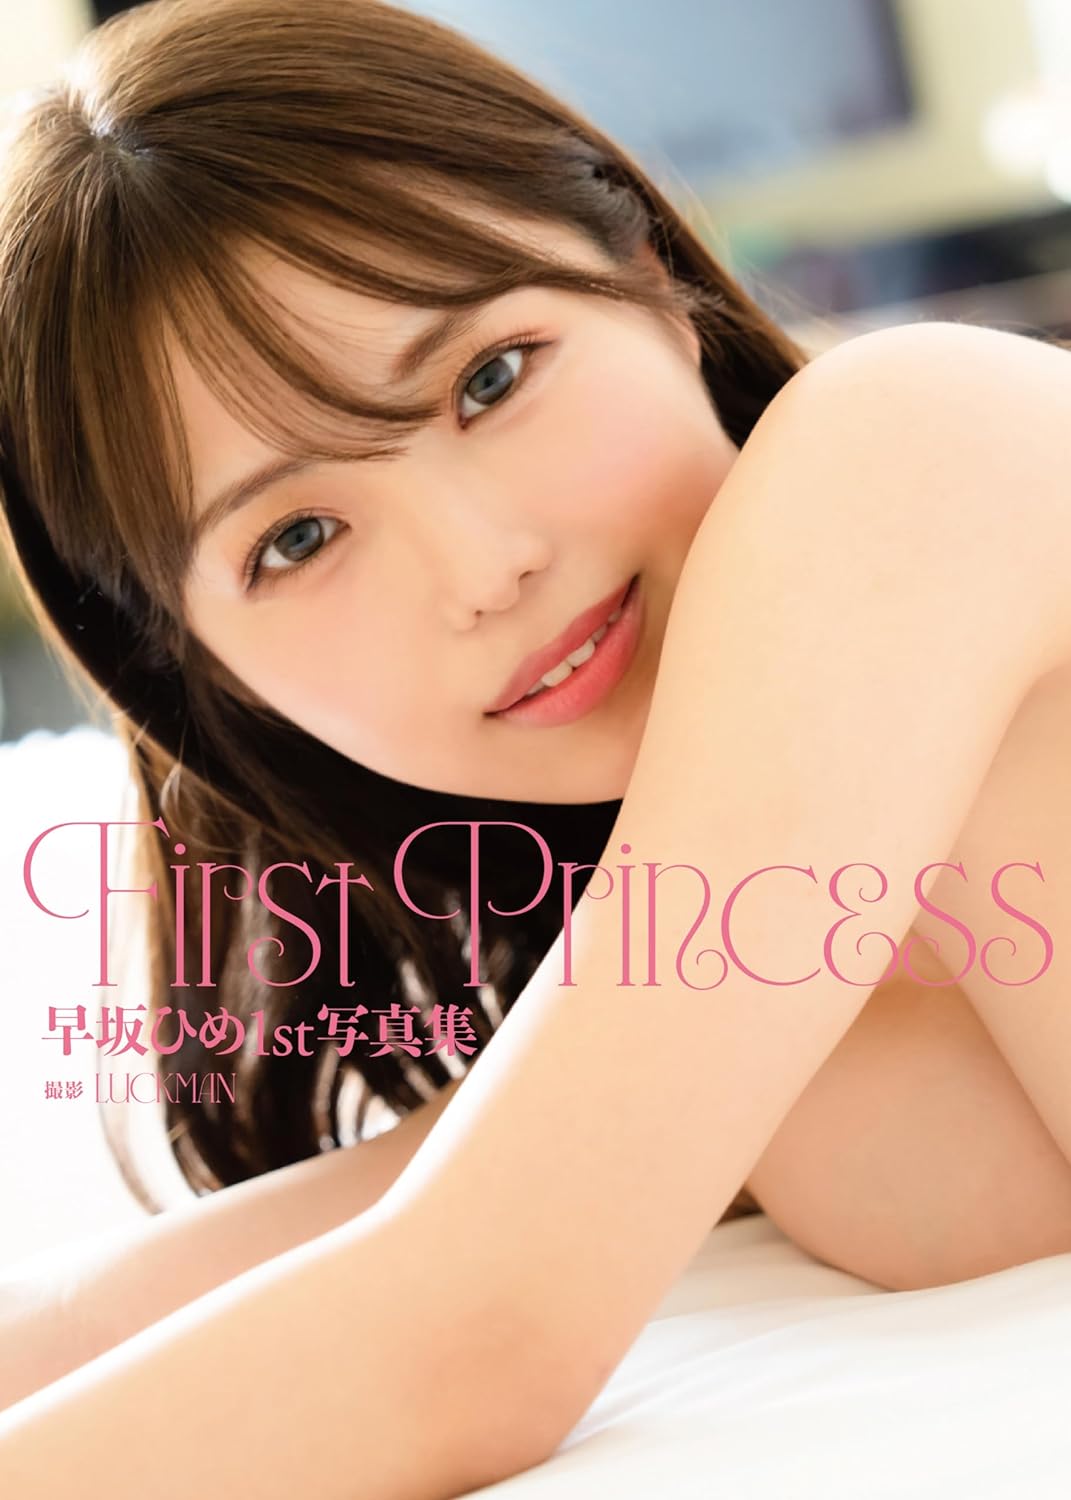 Hime Hayasaka 1st Photo Book "First Princess"